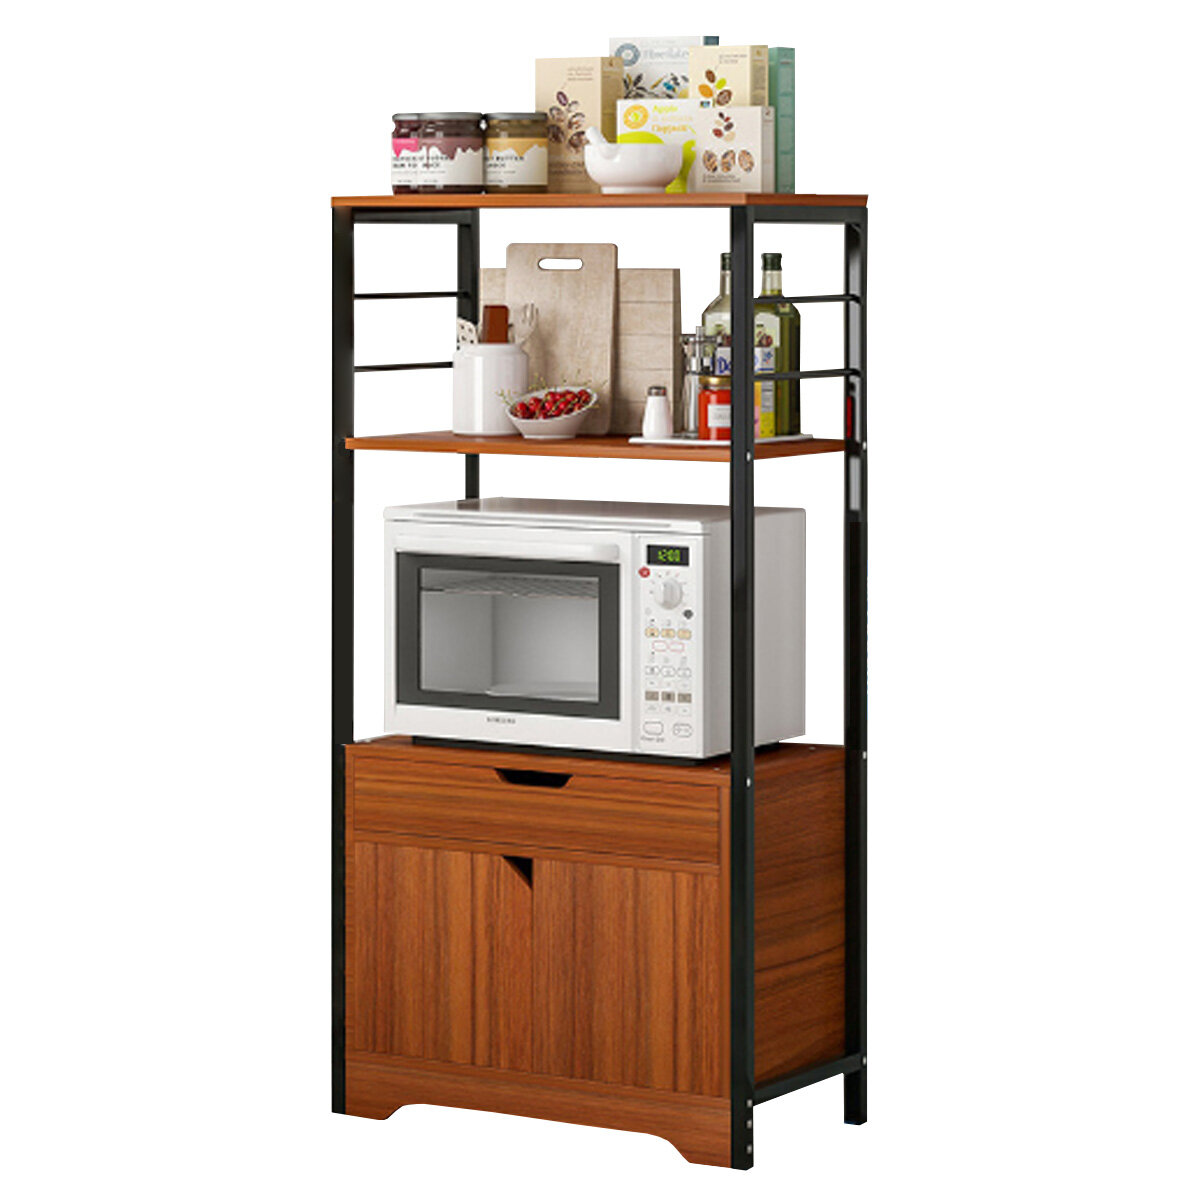 

3 Tiers Microwave Oven Rack Kitchen Cupboard Rack Storage Shelf Storage Cabinet Desktop Space Saving Organizer